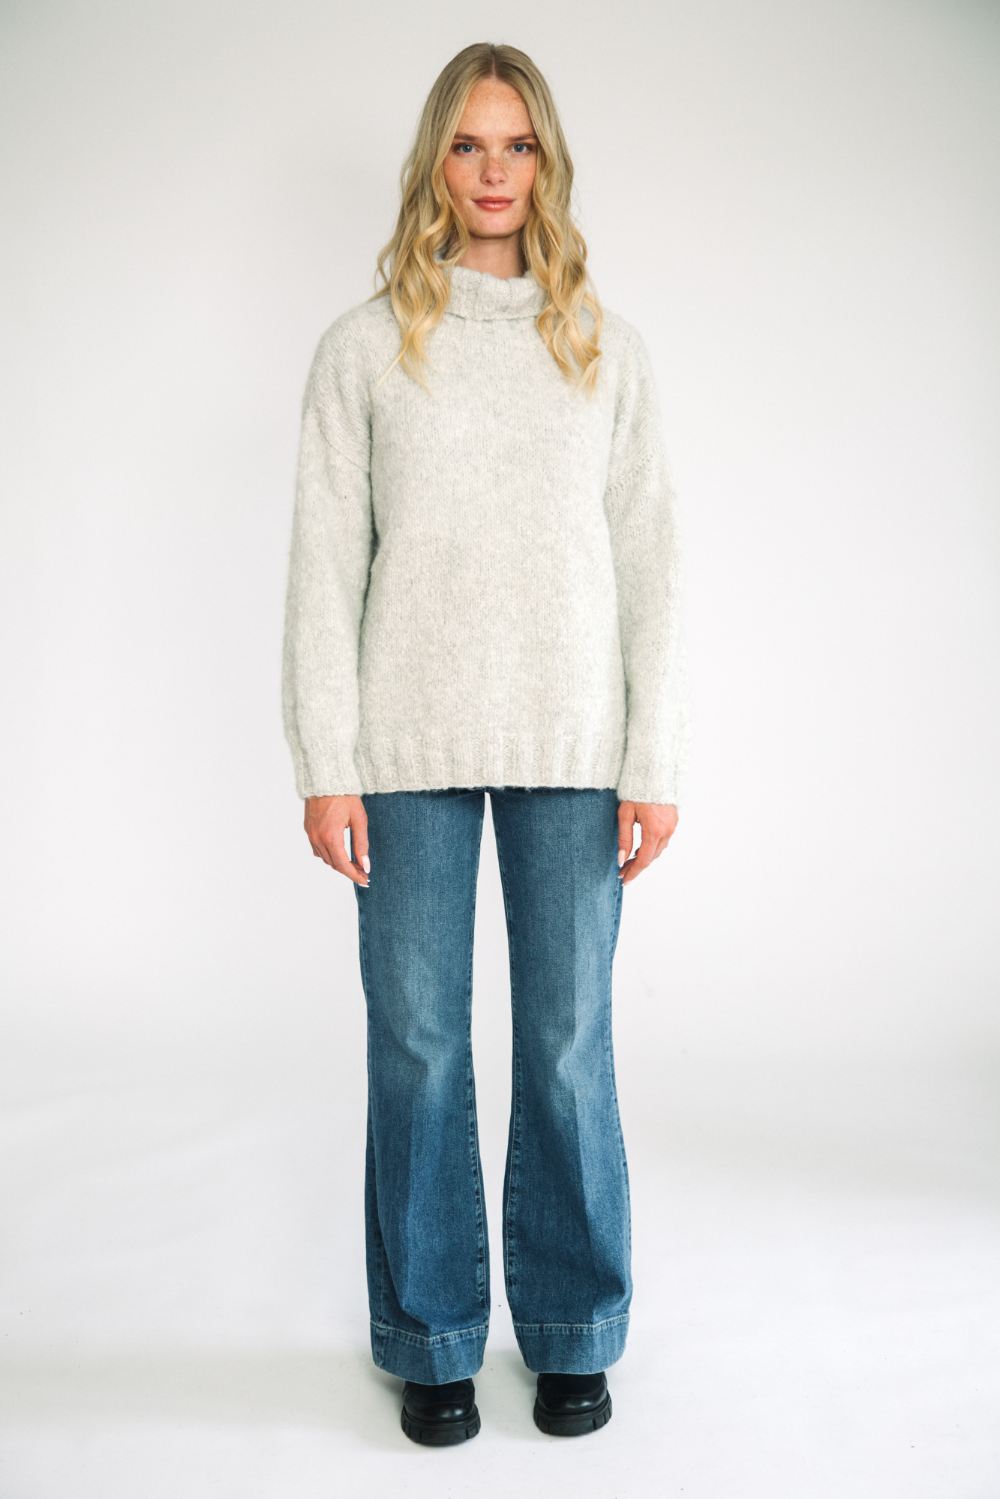 hand knit alpaca jumper sweater light grey white womens front view